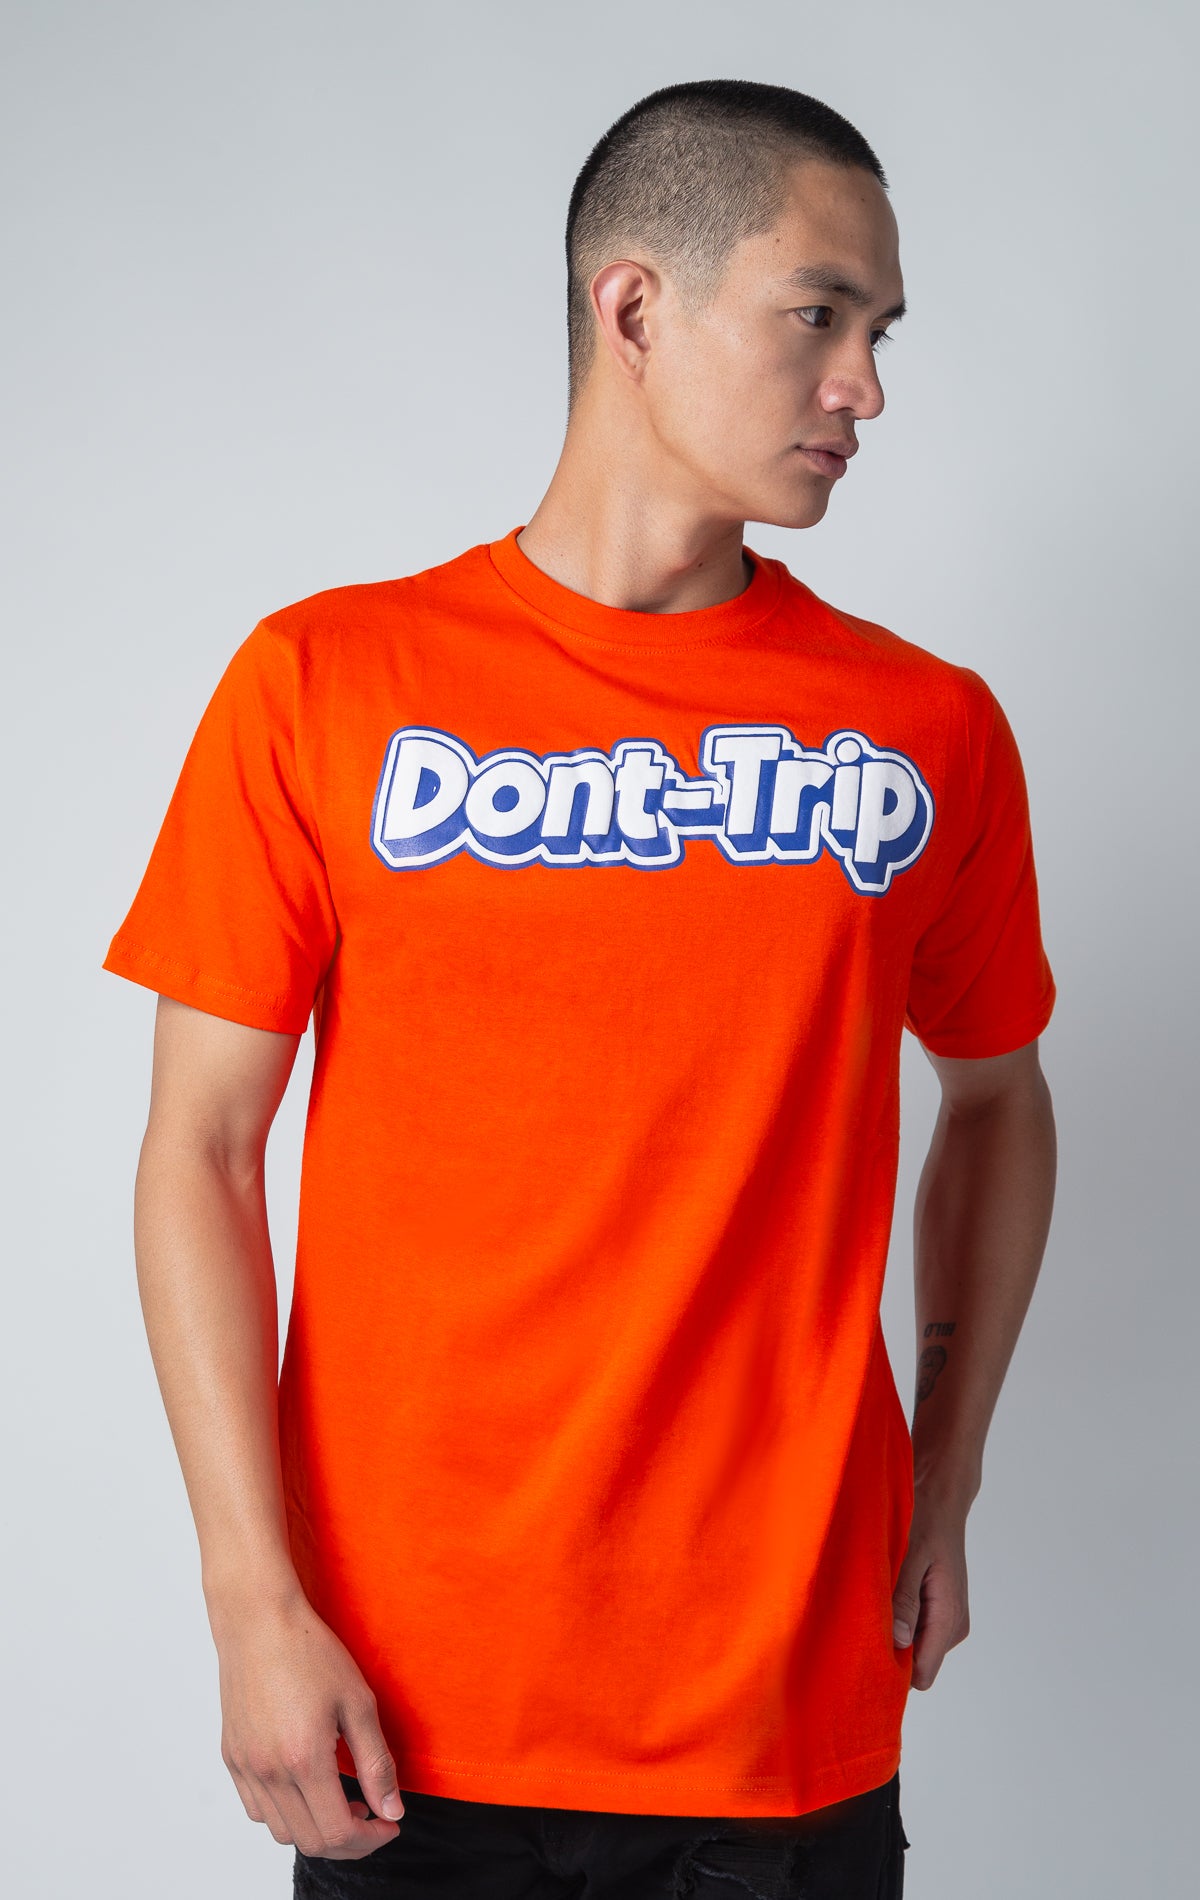 "Don't-trip" graphic T-shirt in orange